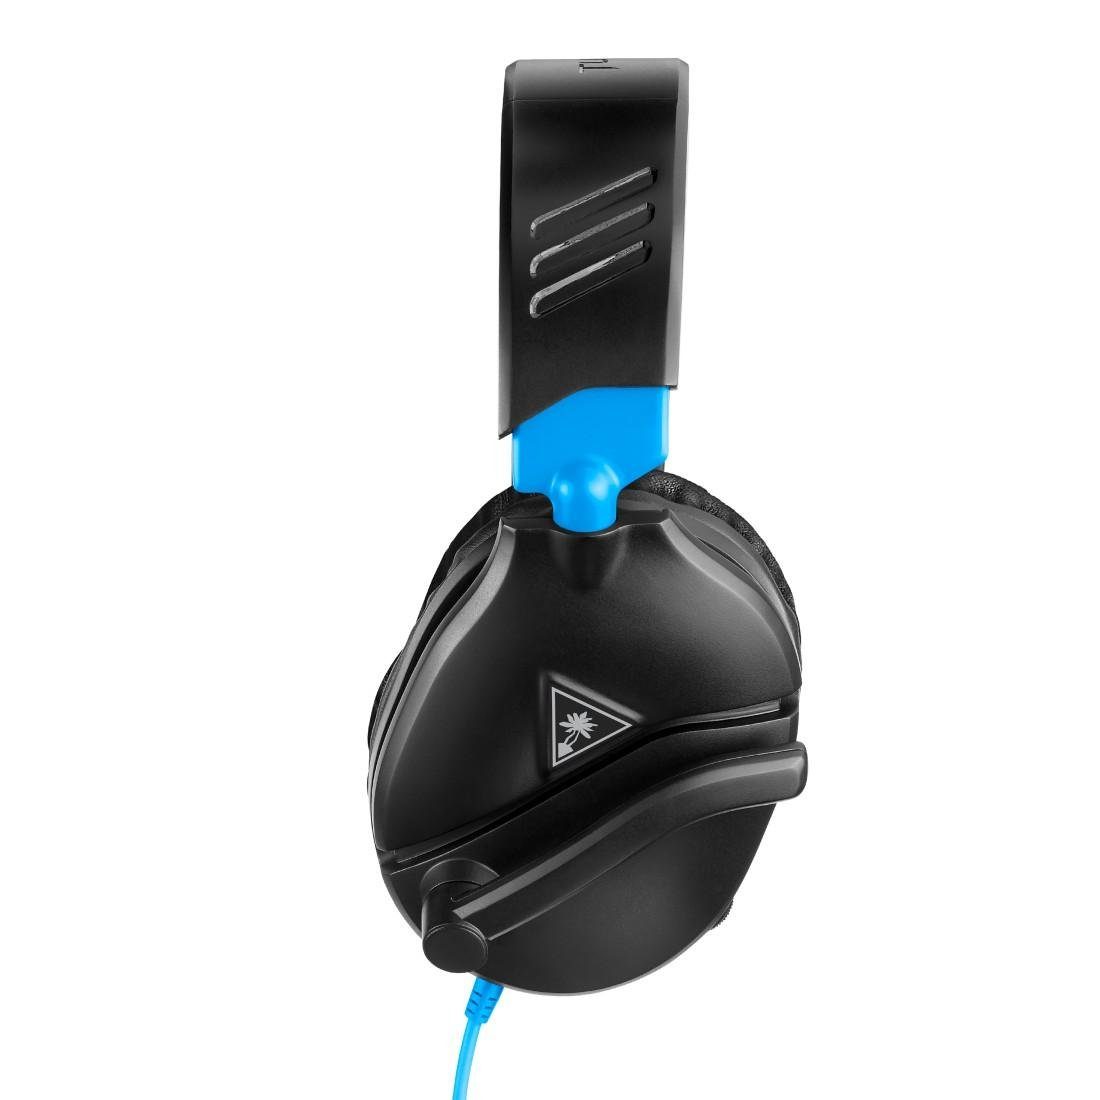 Turtle Beach Recon 70P schwarz/blau Gaming-Headset